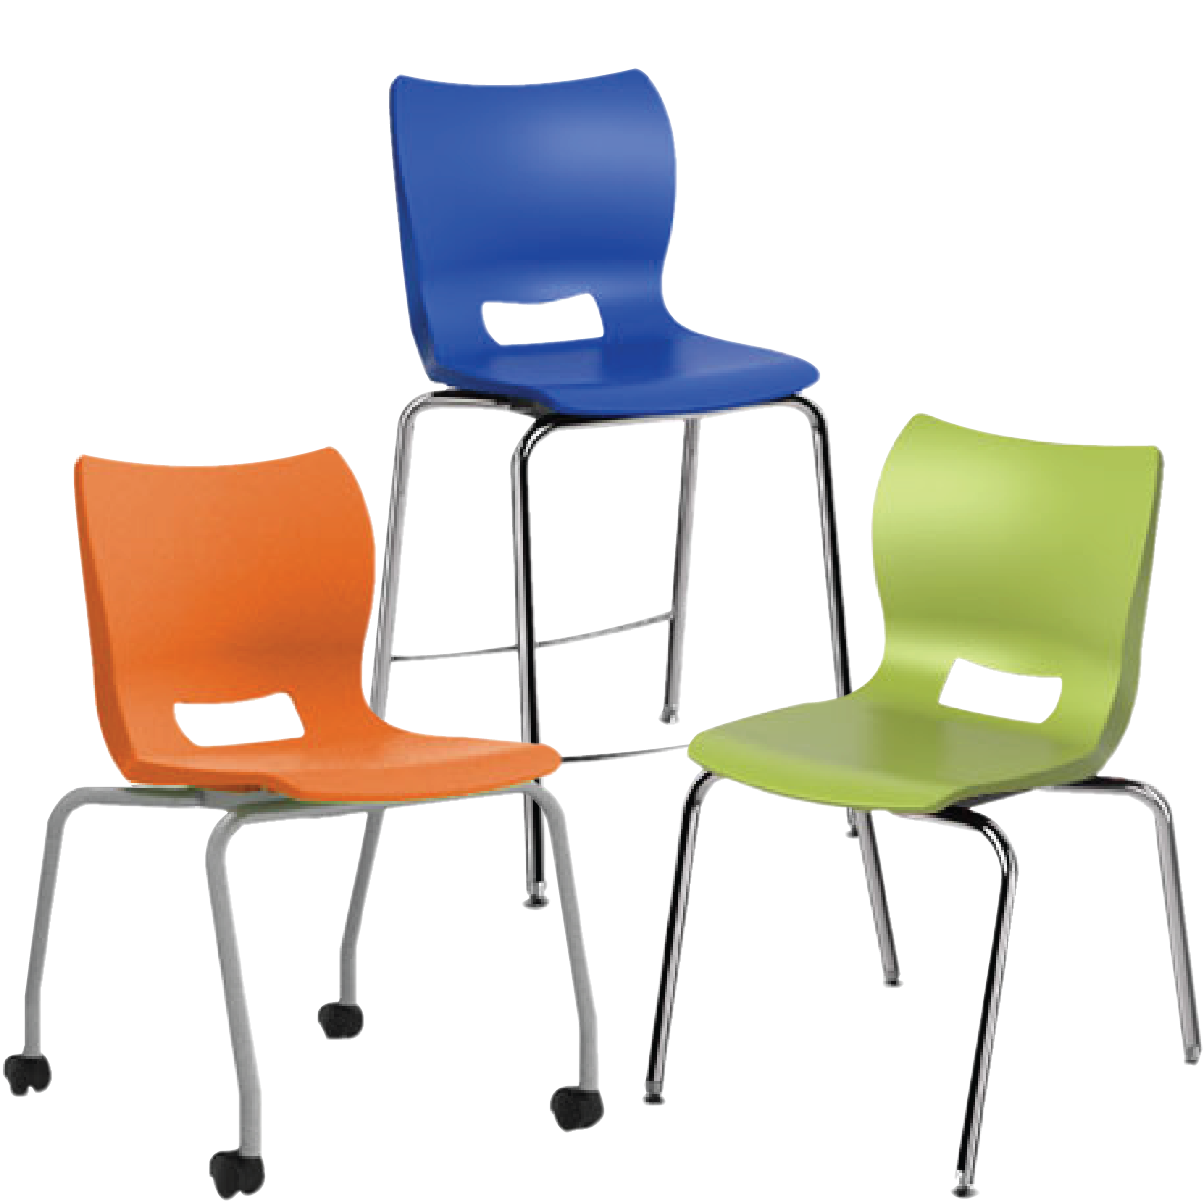 Lone Star Furnishings - Texas School Furniture - plato seating